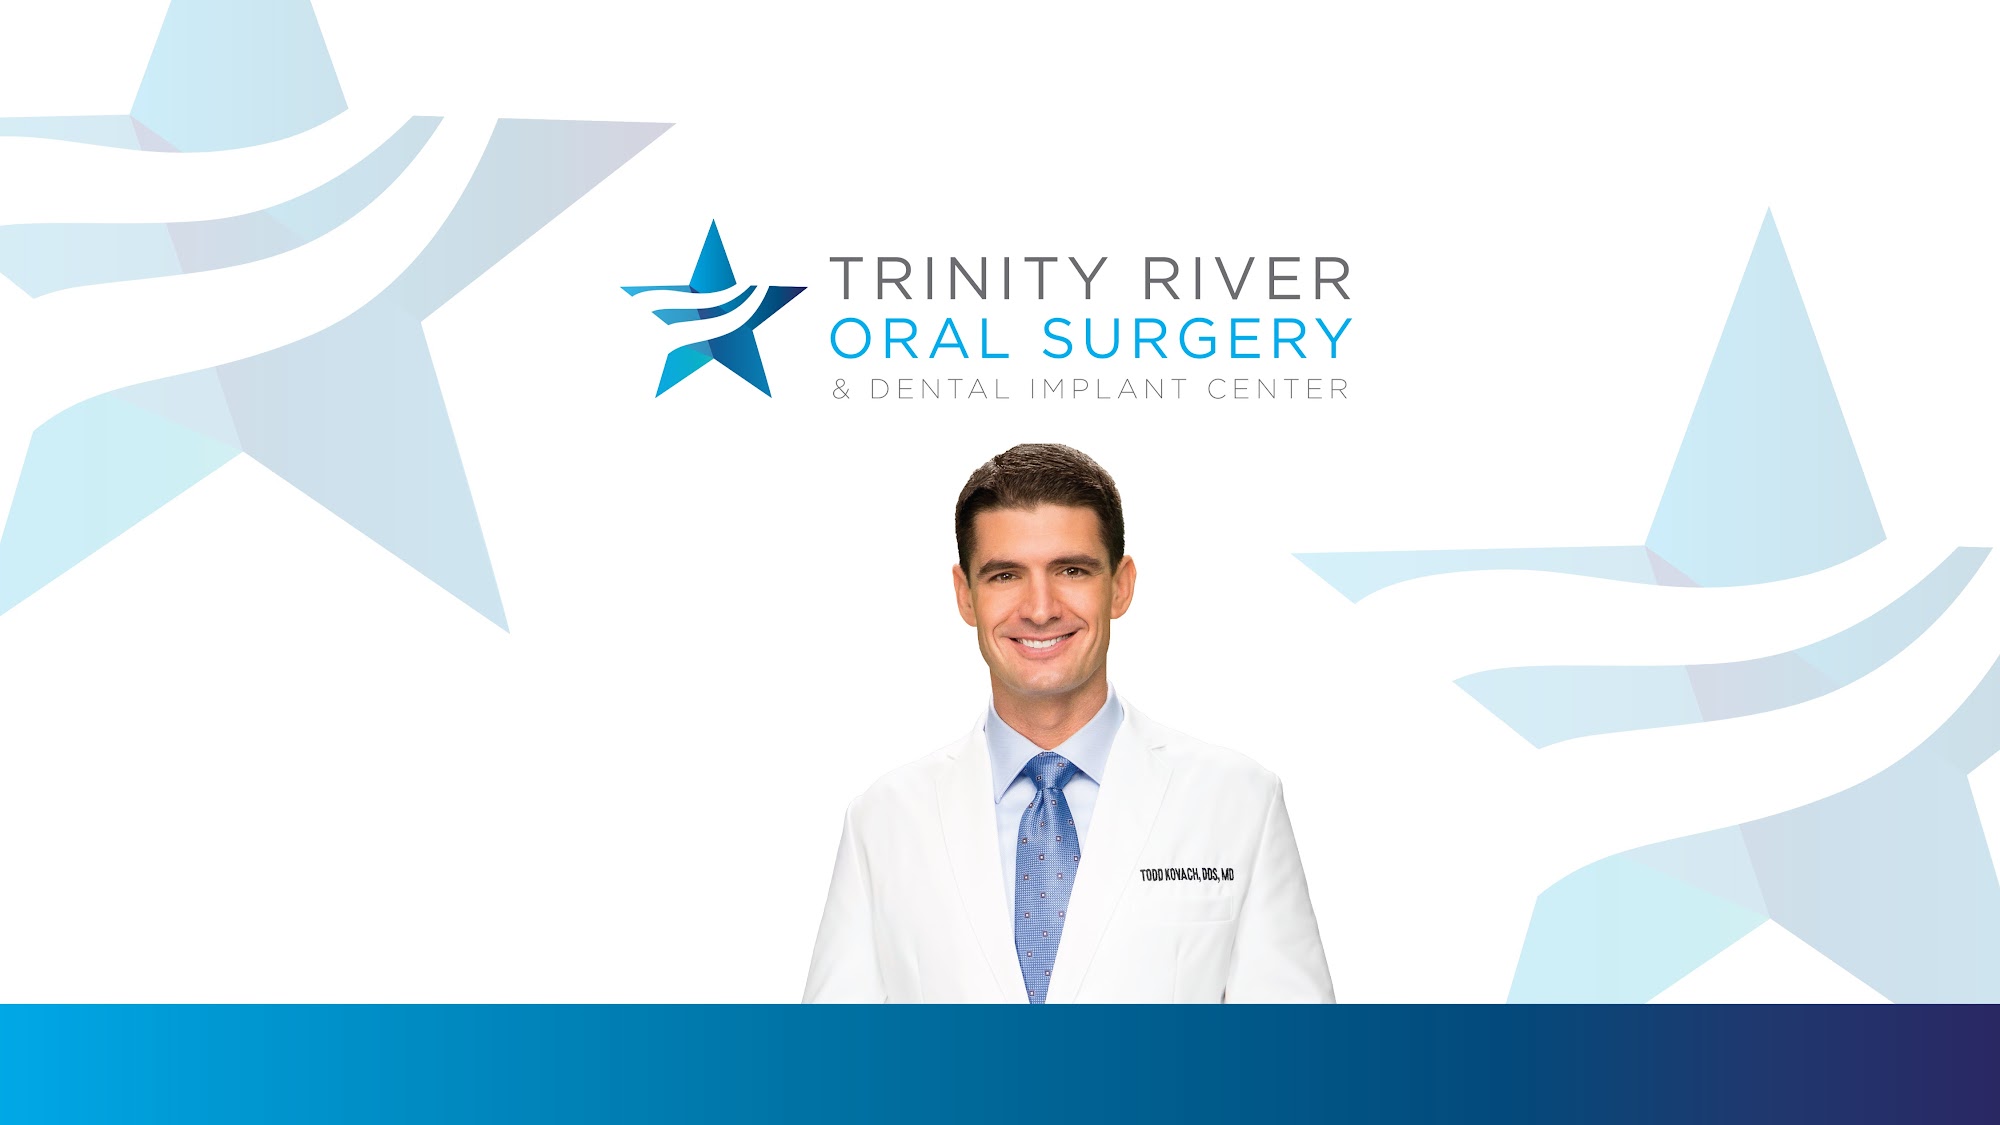 Trinity River Oral Surgery & Dental Implant Center